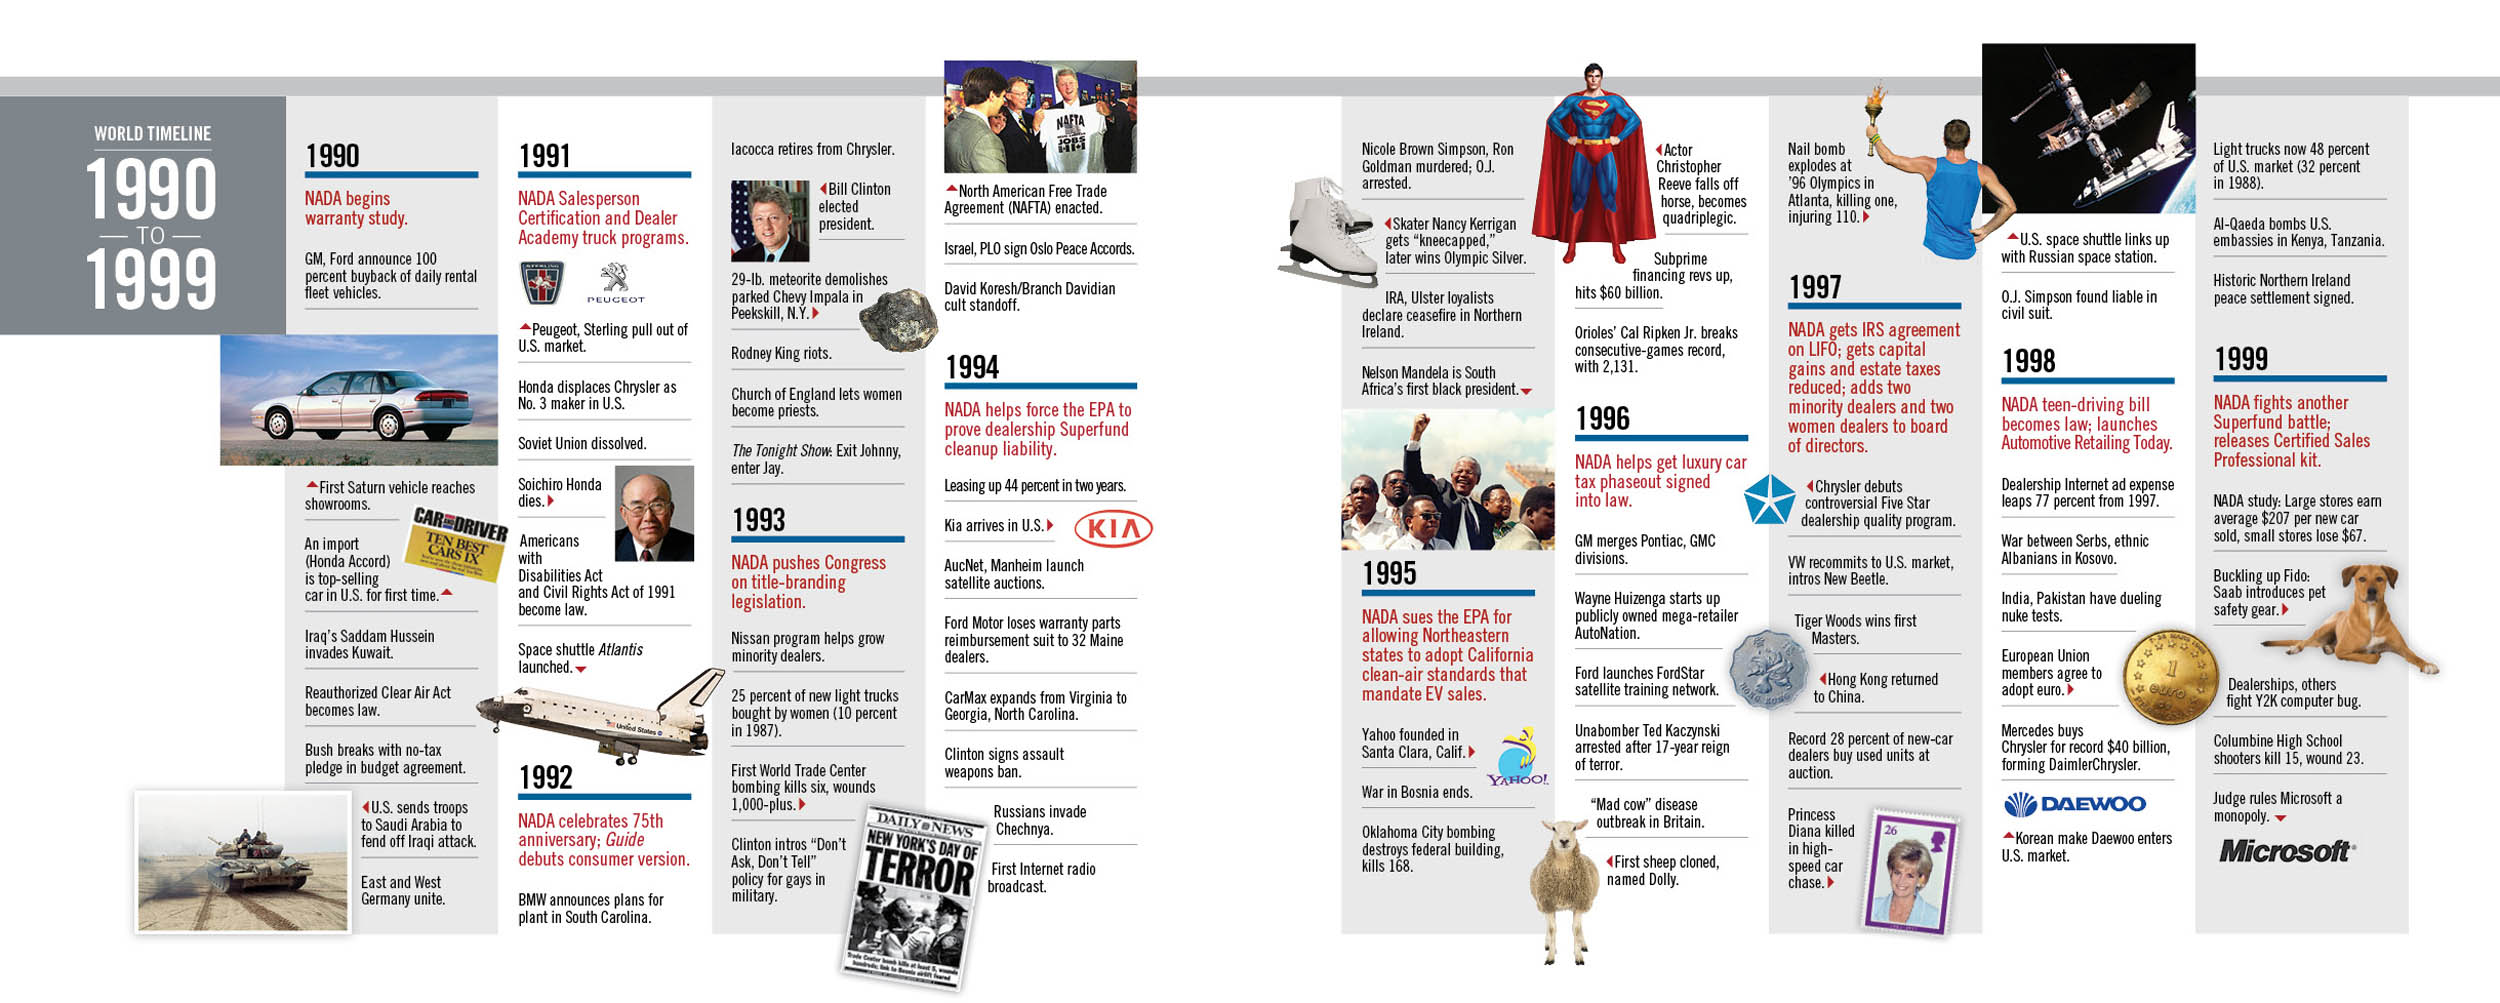 The NADA Story Timeline 1990-1999